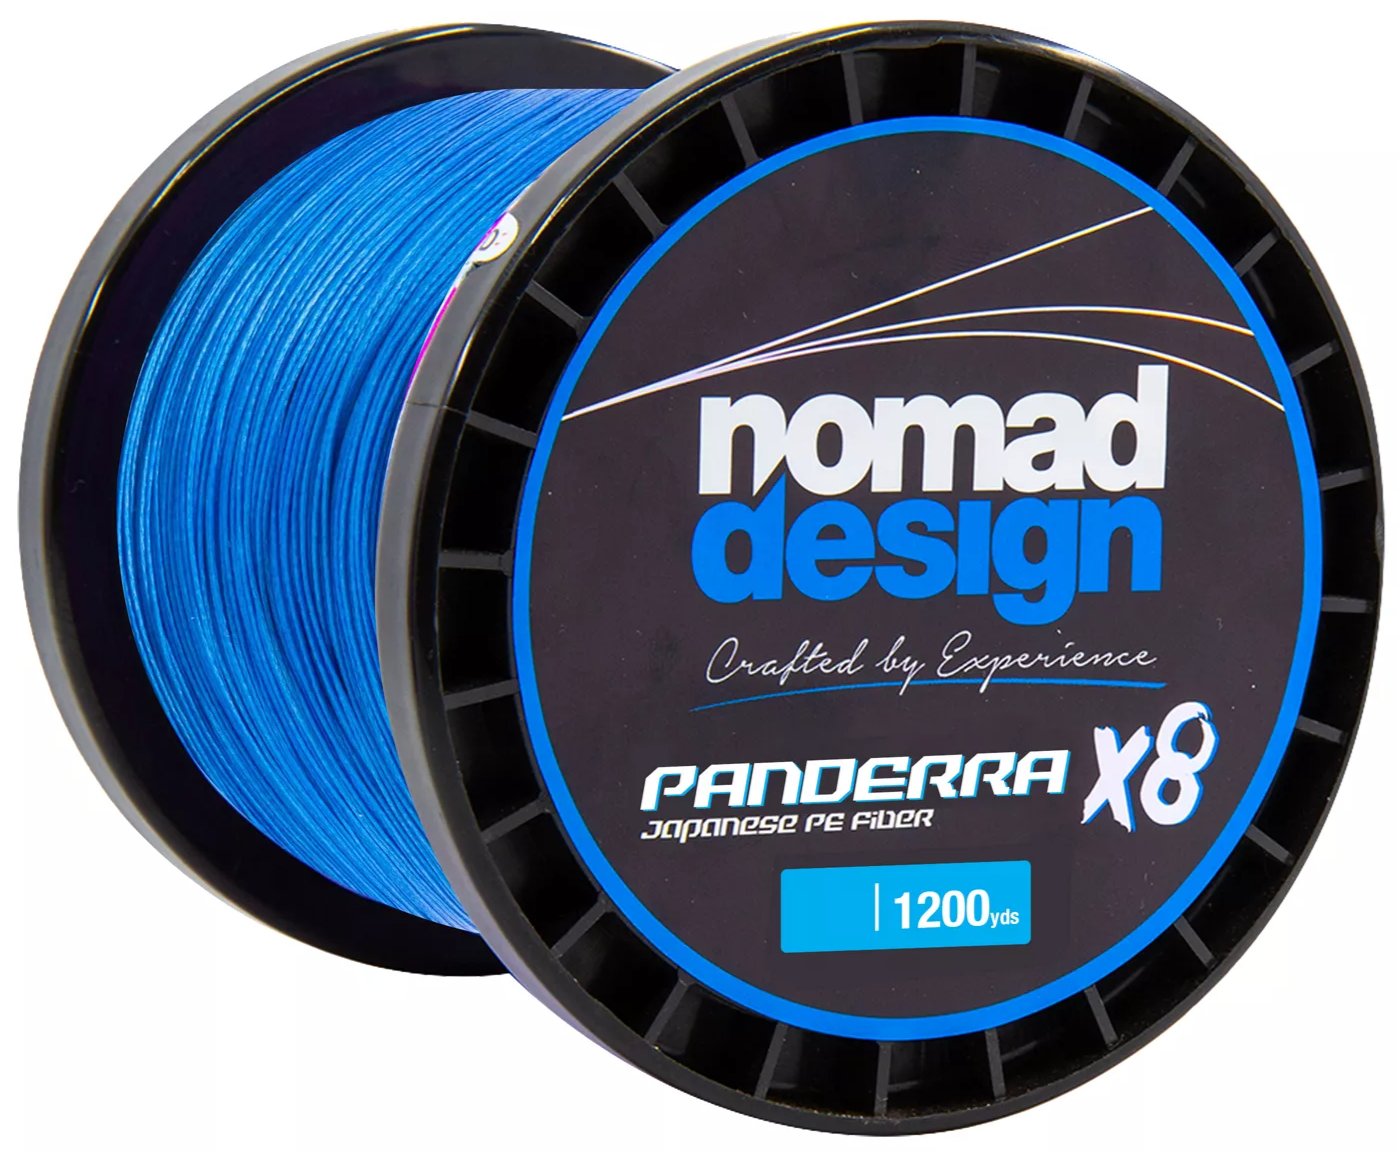 Nomad Design Panderra x8 Braid 80lb 2000yds - Multicolor